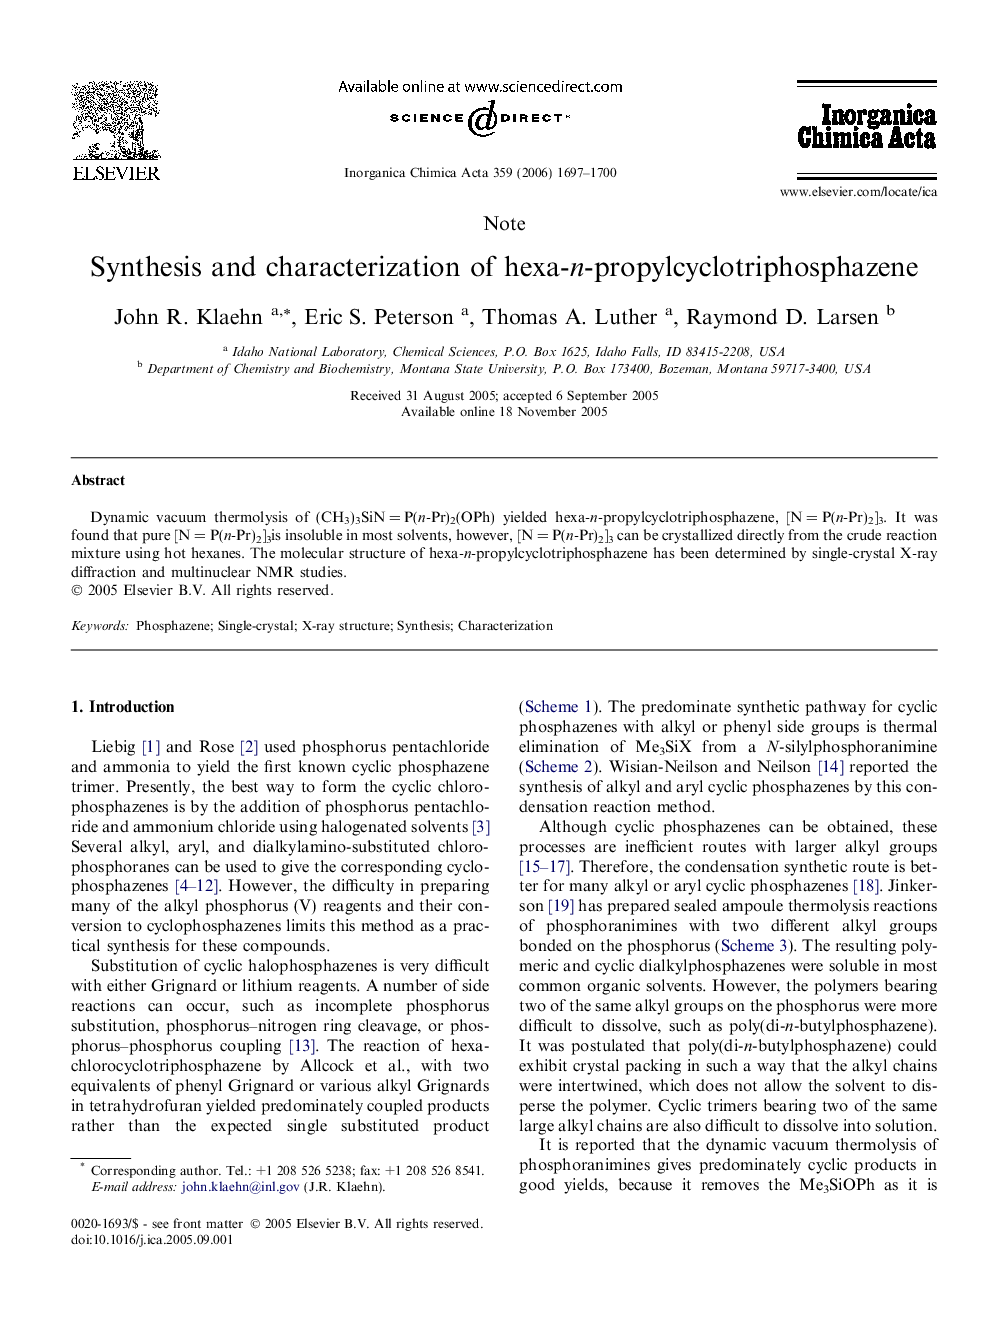 Synthesis and characterization of hexa-n-propylcyclotriphosphazene